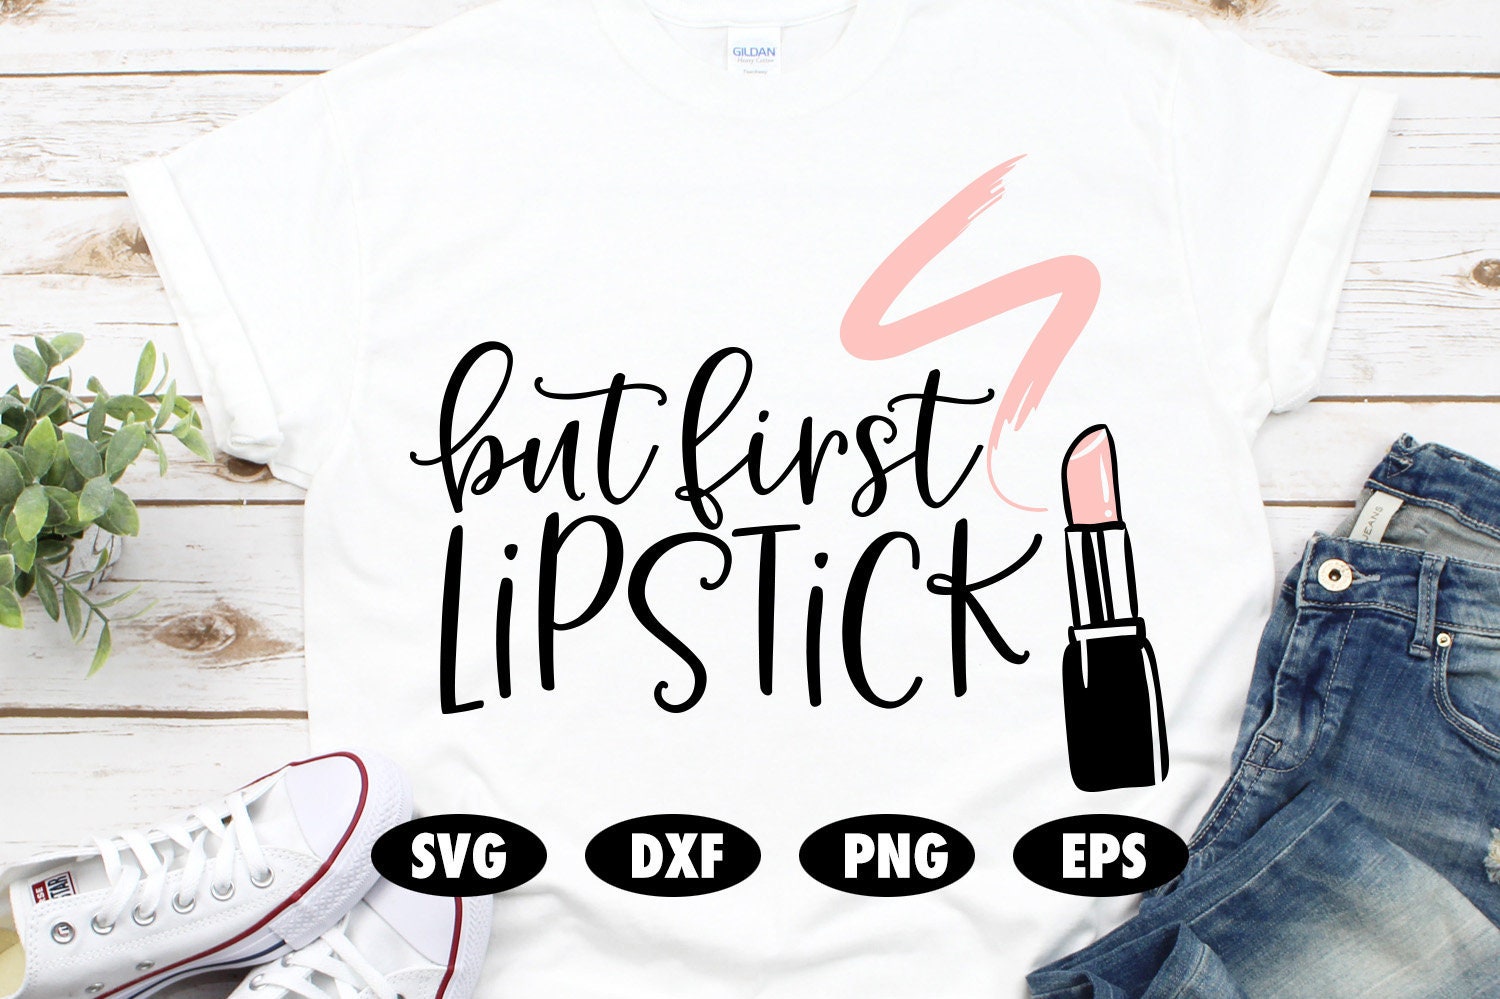 But First Lipstick Pouch